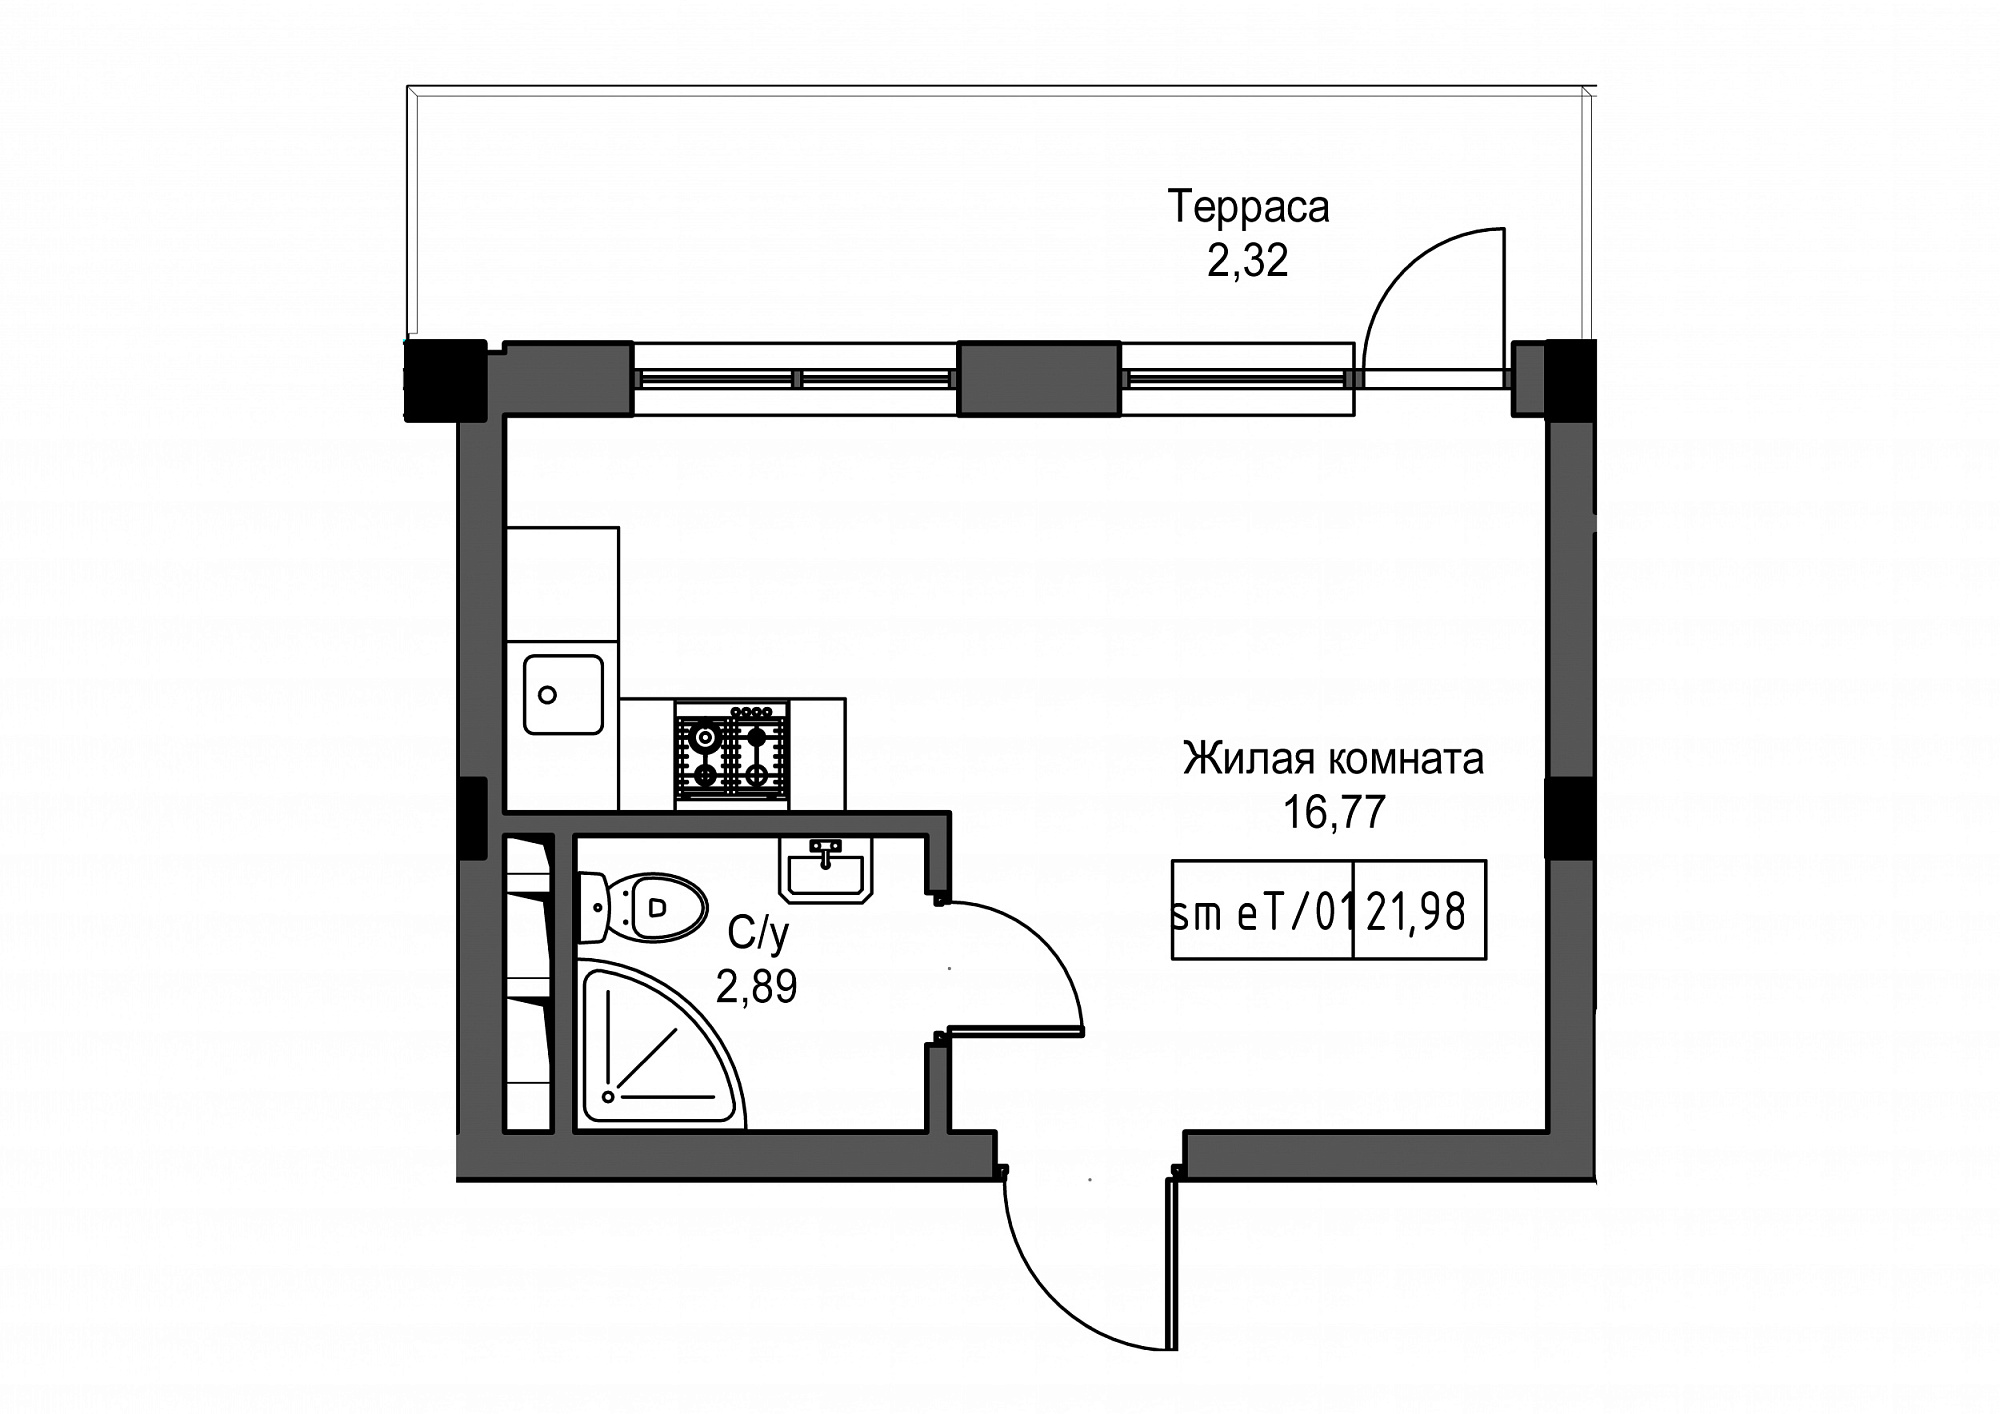 Planning Smart flats area 21.98m2, UM-002-03/0013.